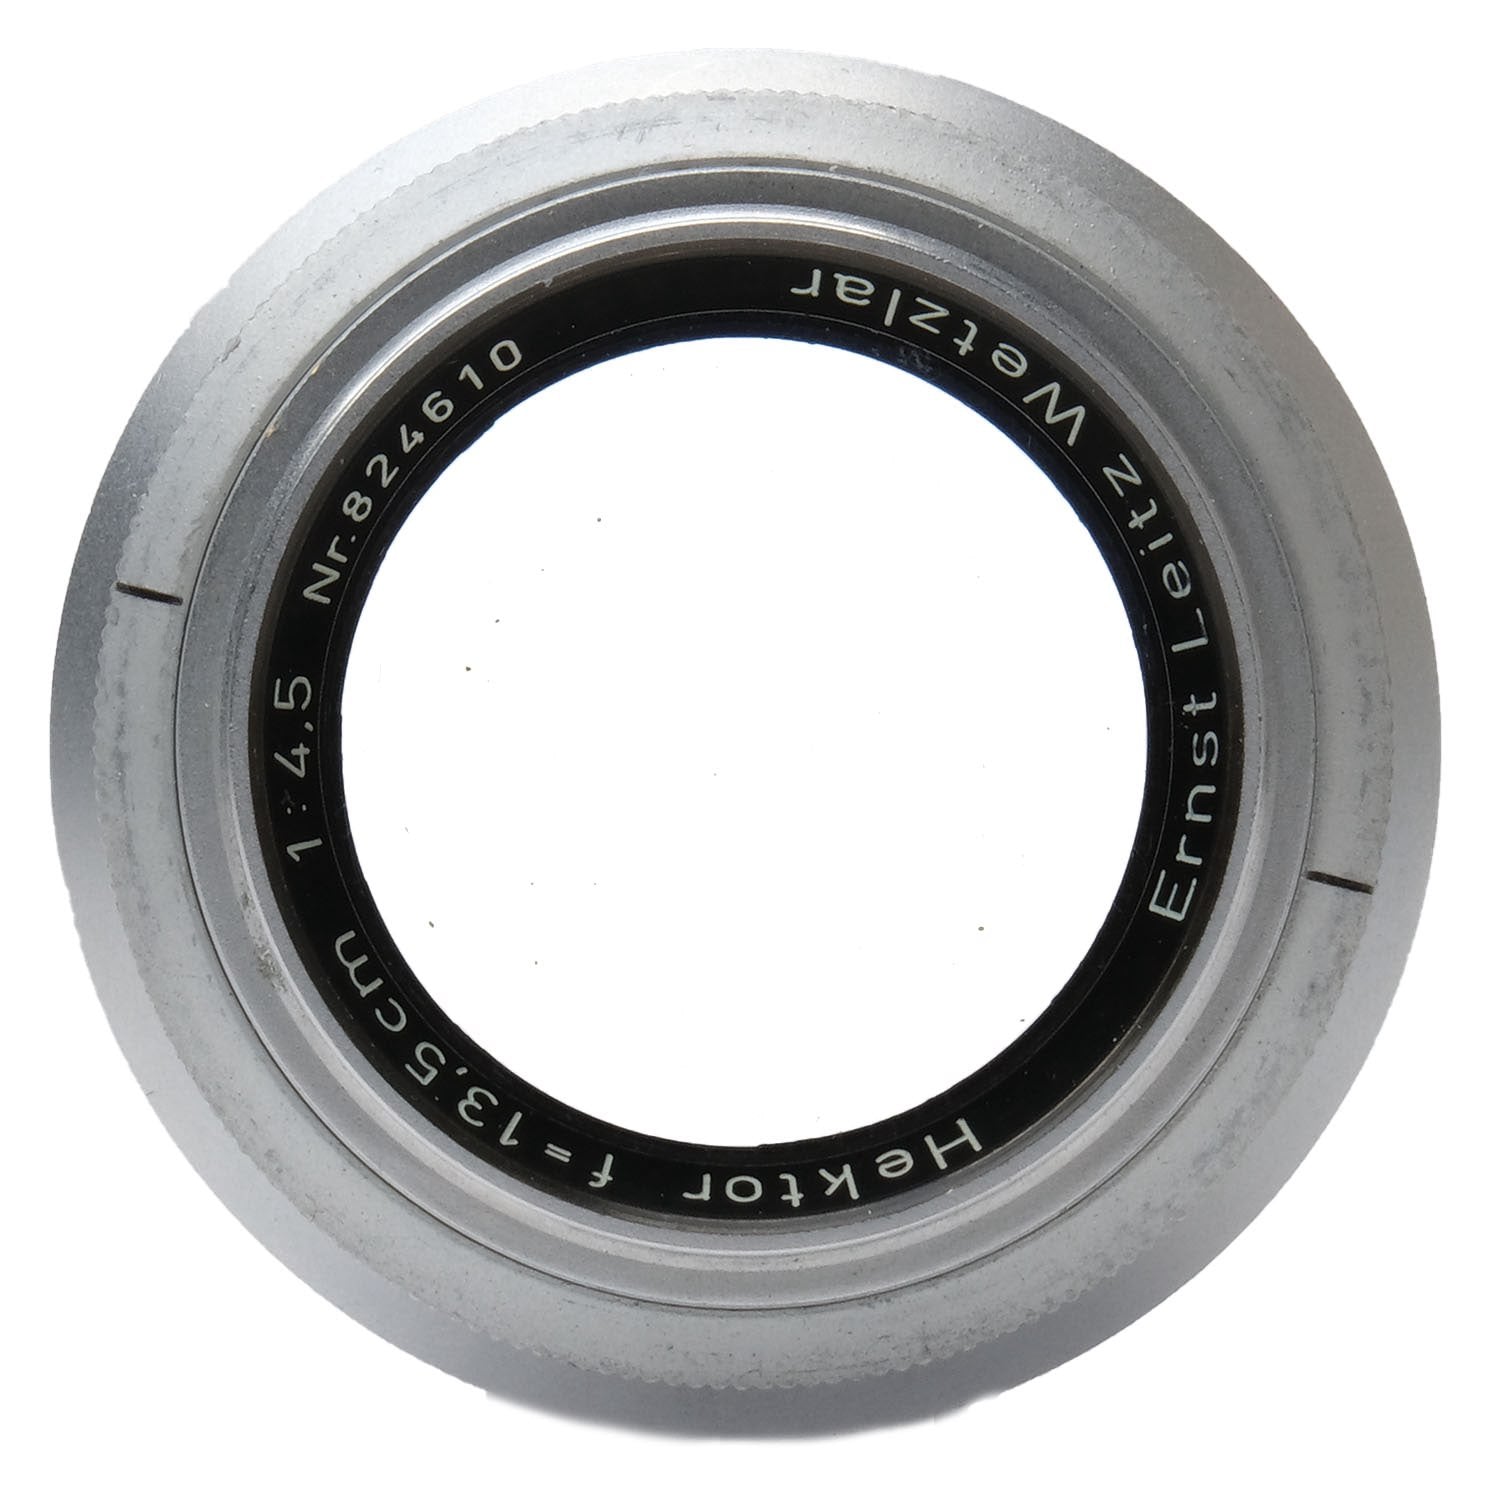 Leica 13.5cm f4.5 Hektor 824610